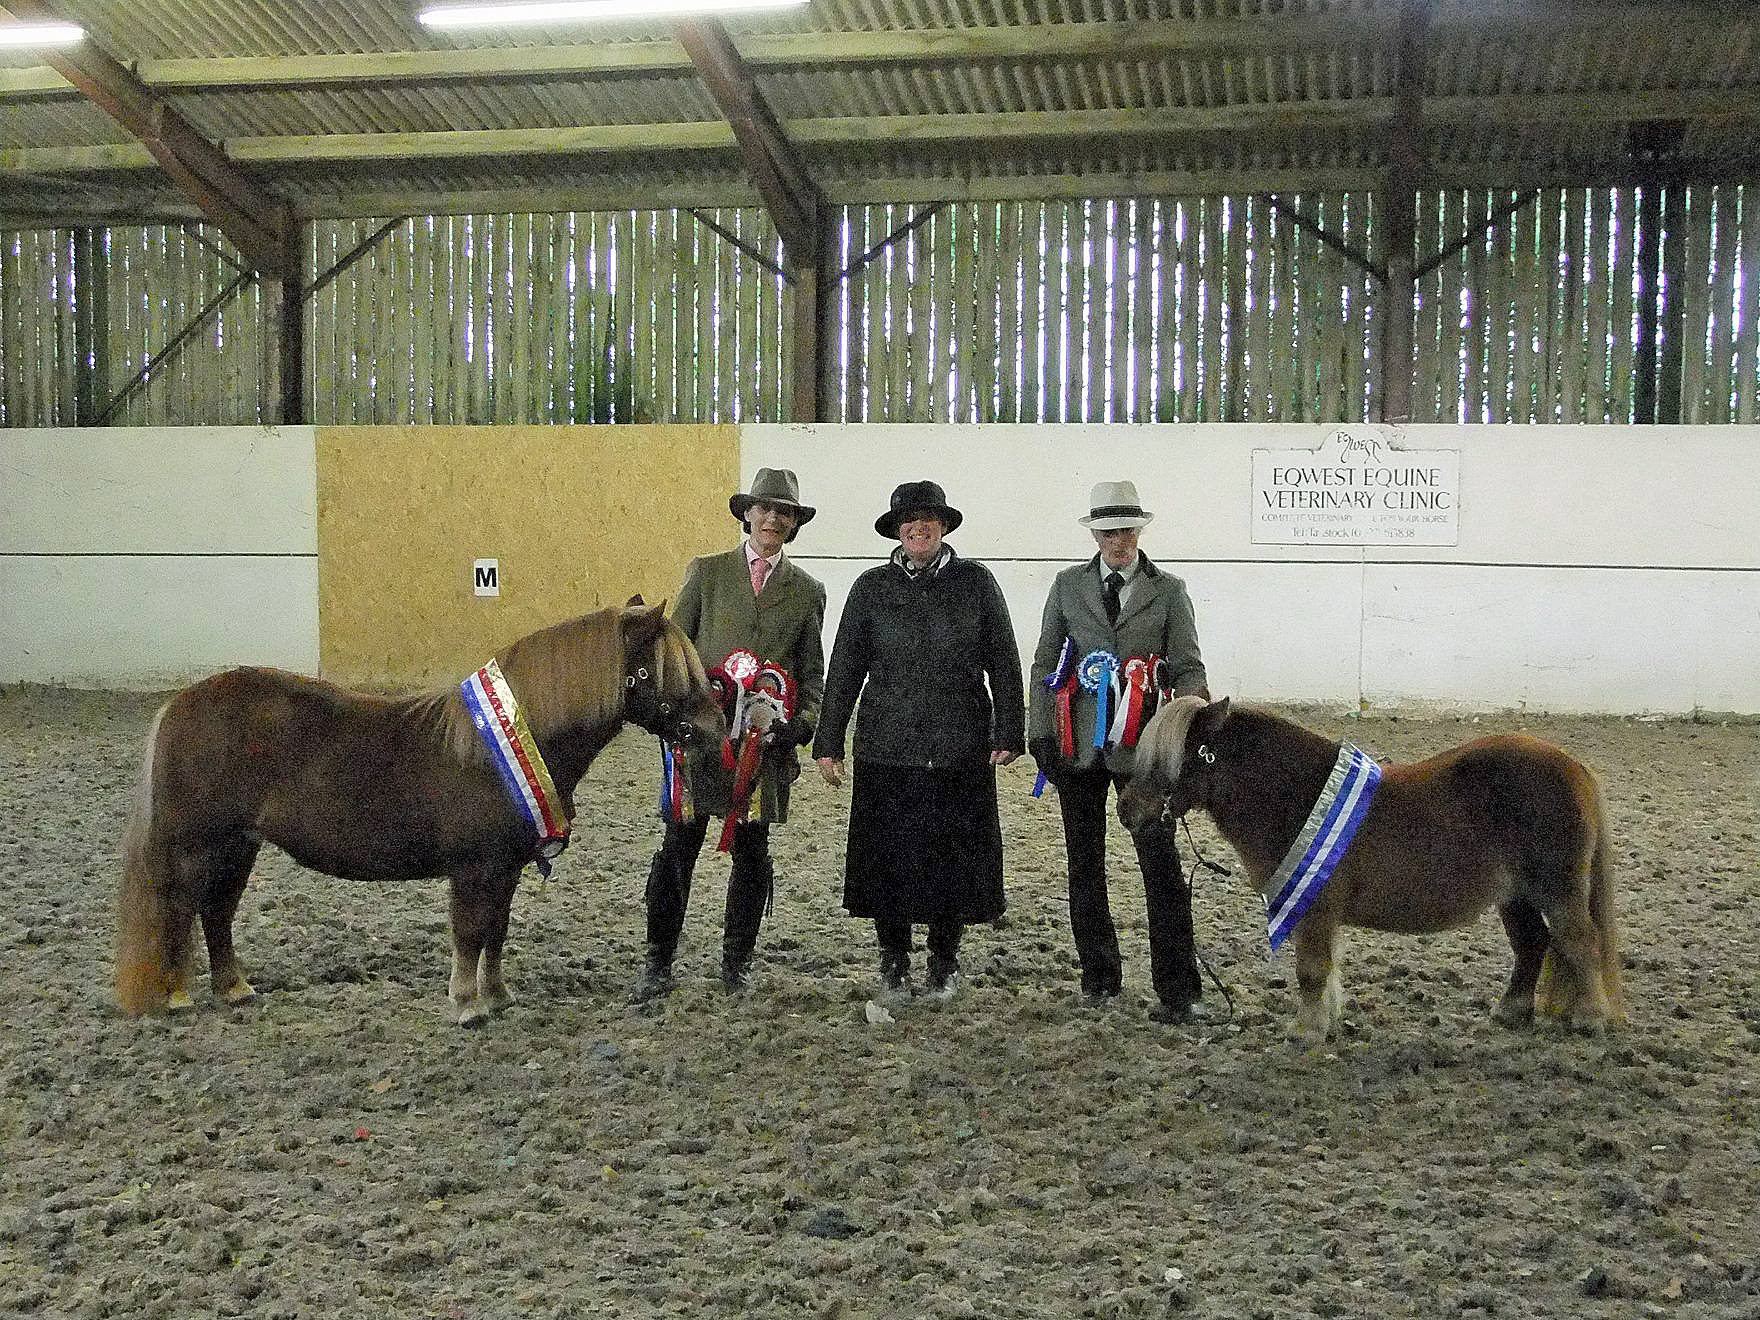 South West Shetland Pony Group show: Fabulous end to our show season.